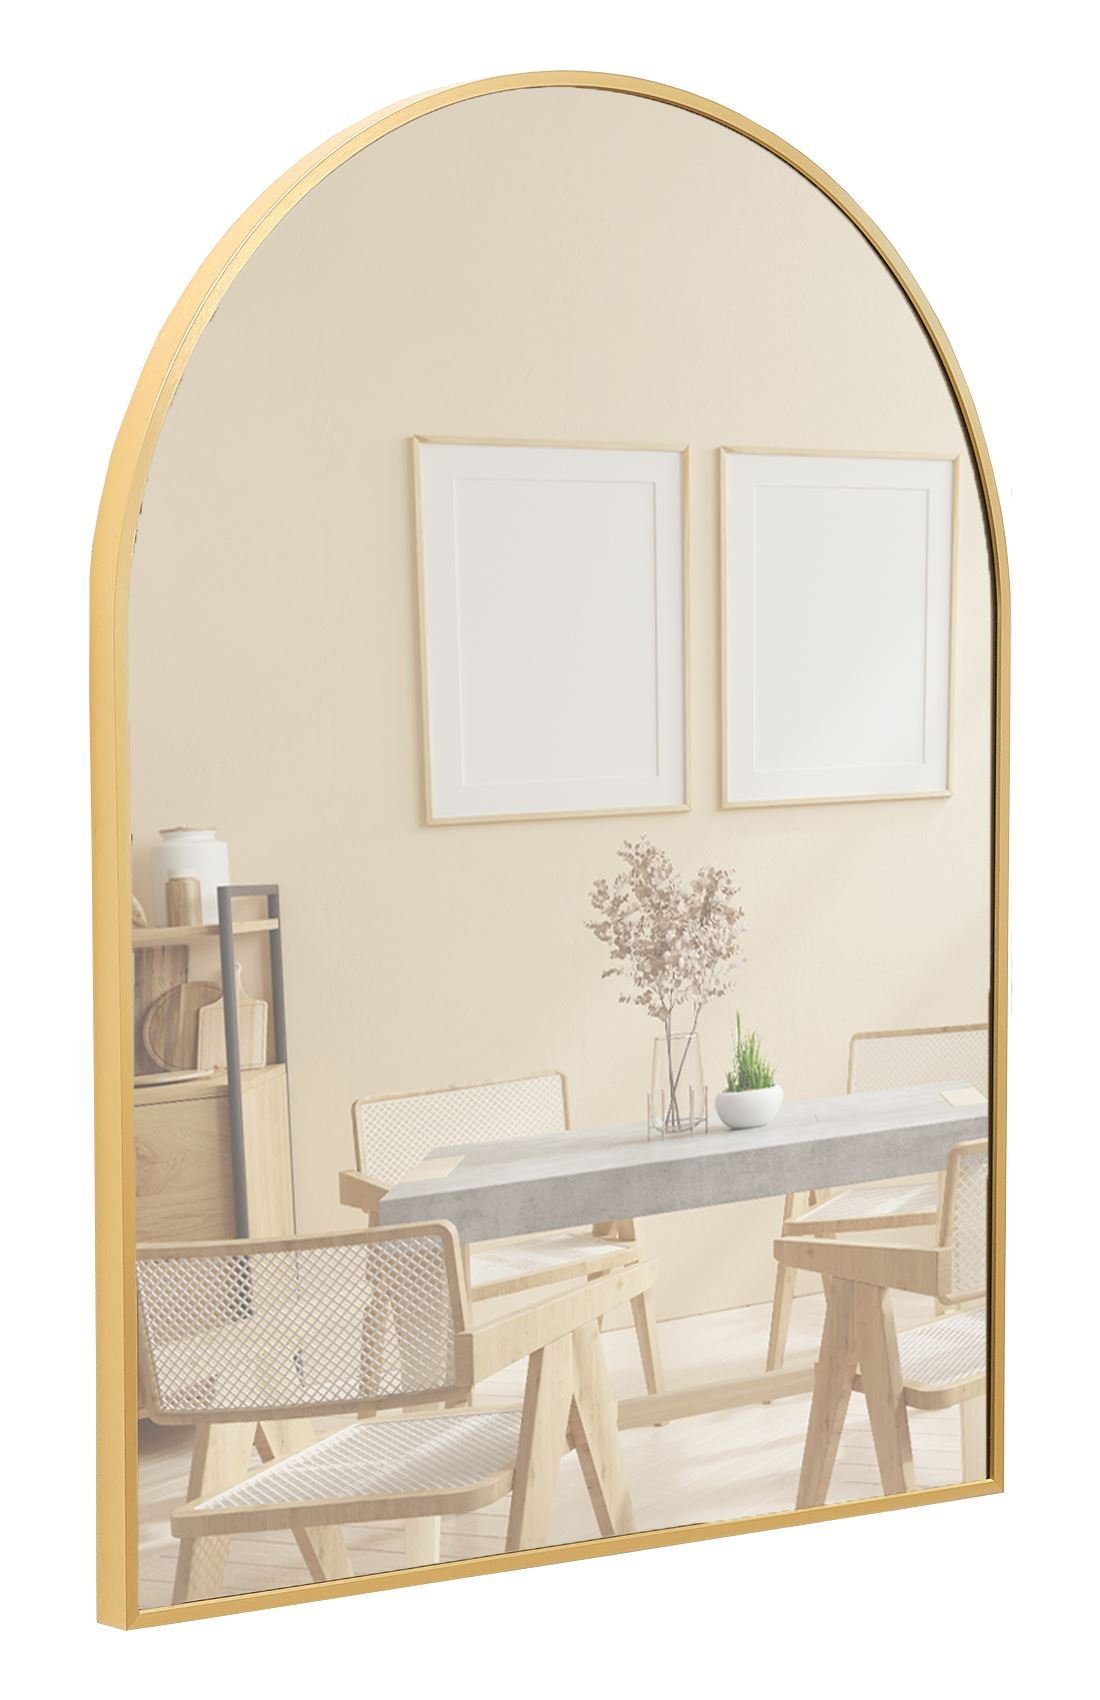 Terra Home Wandspiegel Spiegel 60x80 Metallrahmen Bogenform Schminkspiegel gold